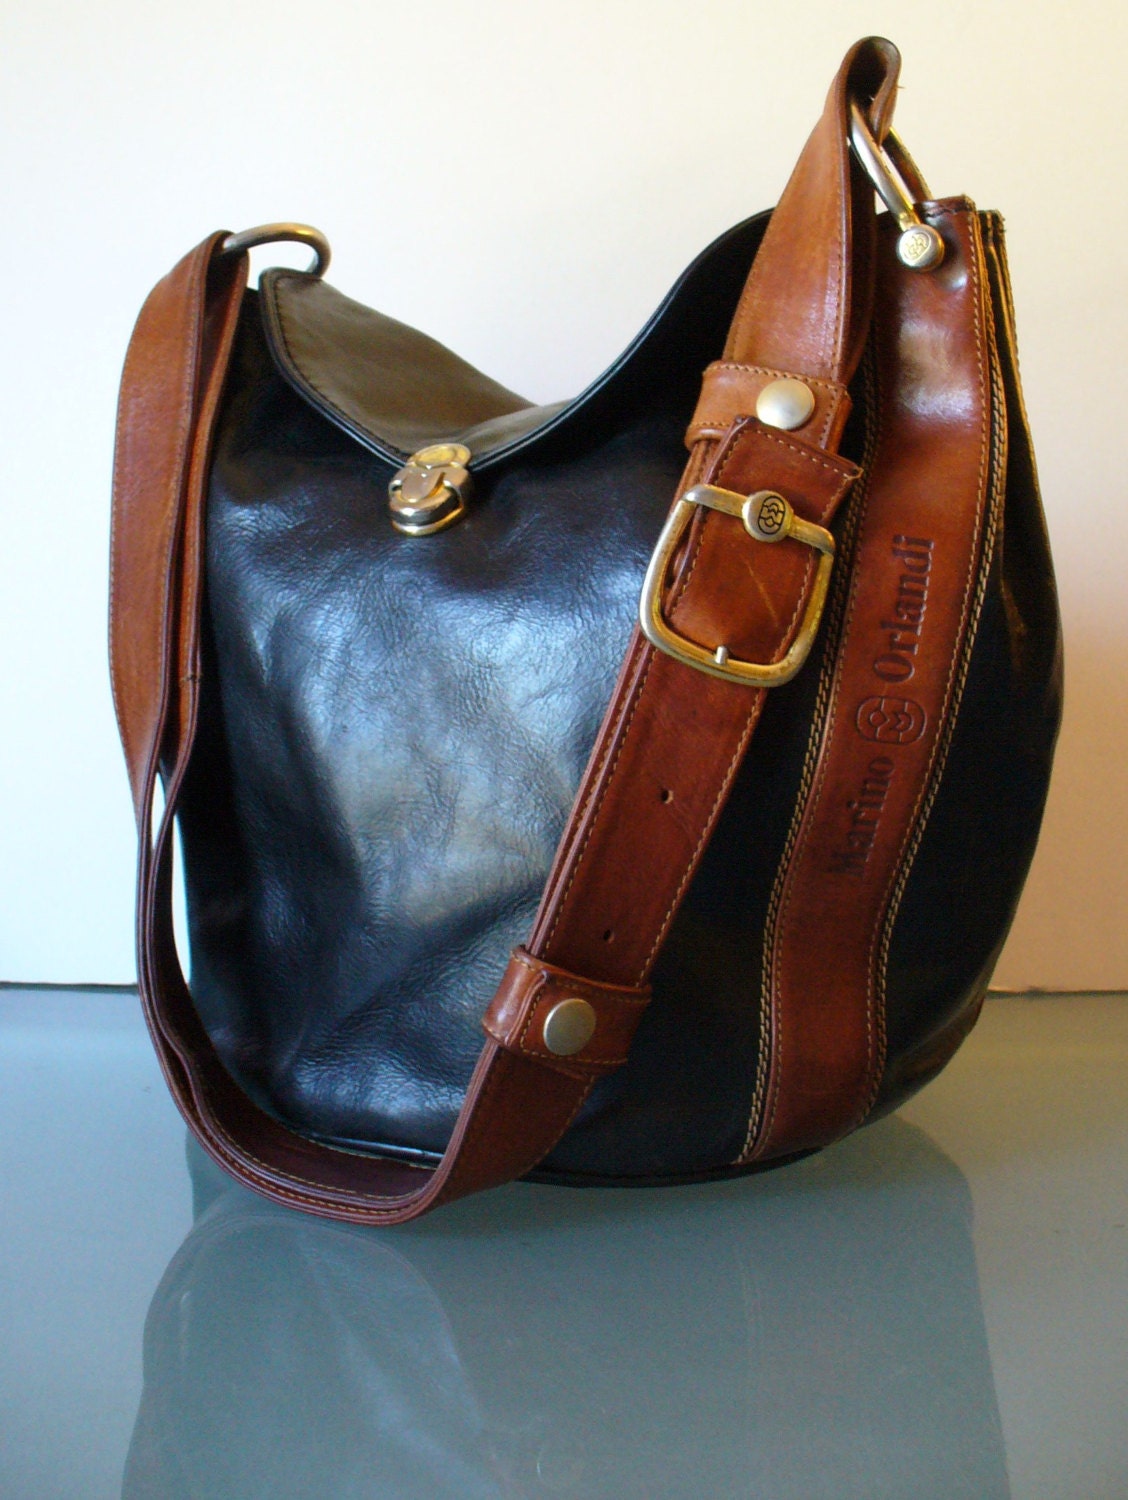 Marino Orlandi Vintage Leather Shoulder Bag Purse in Tan & Brown | eBay